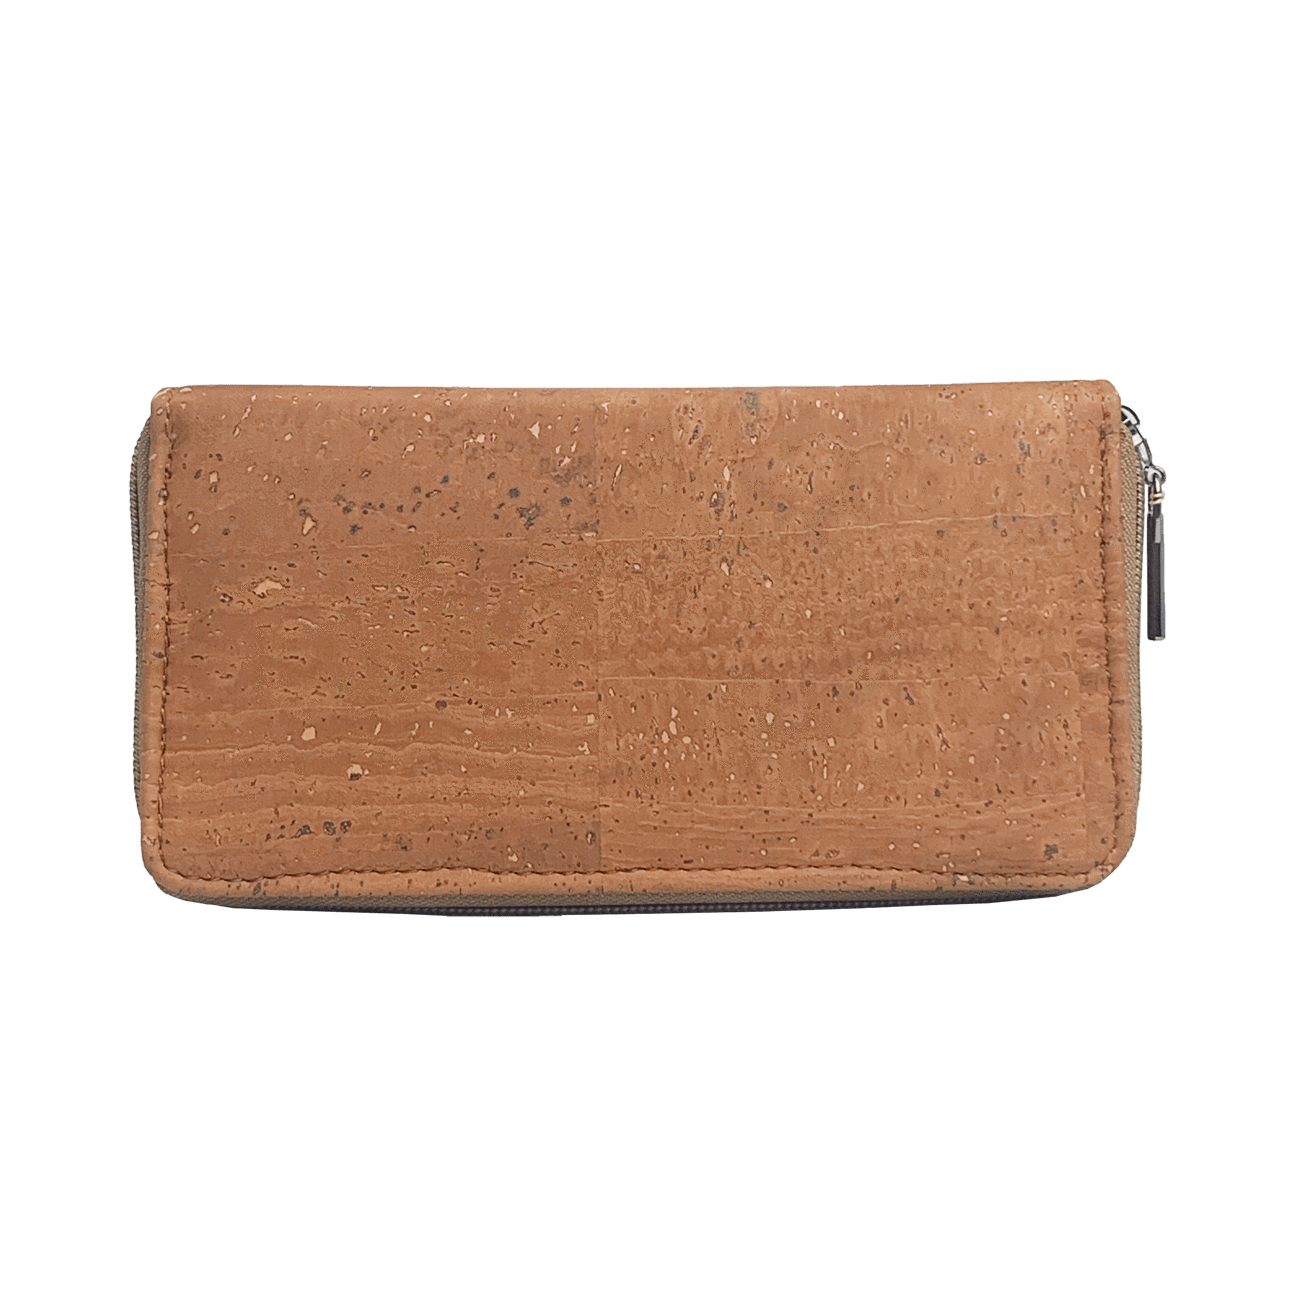 CorkHouse Wallet Light Brown Zip Around Cork Wallet